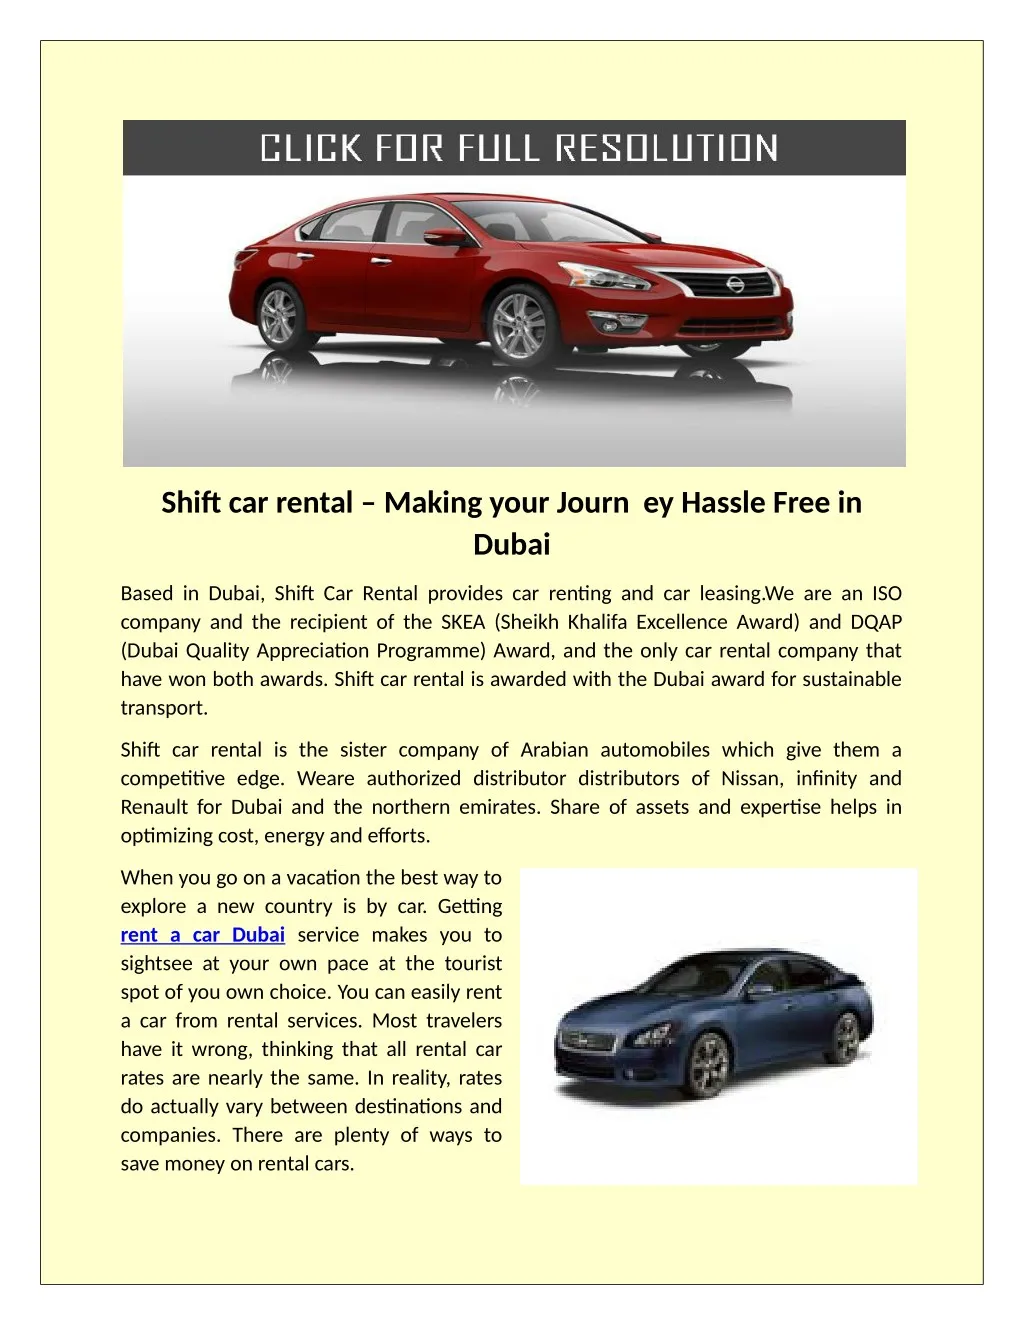 shift car buying review